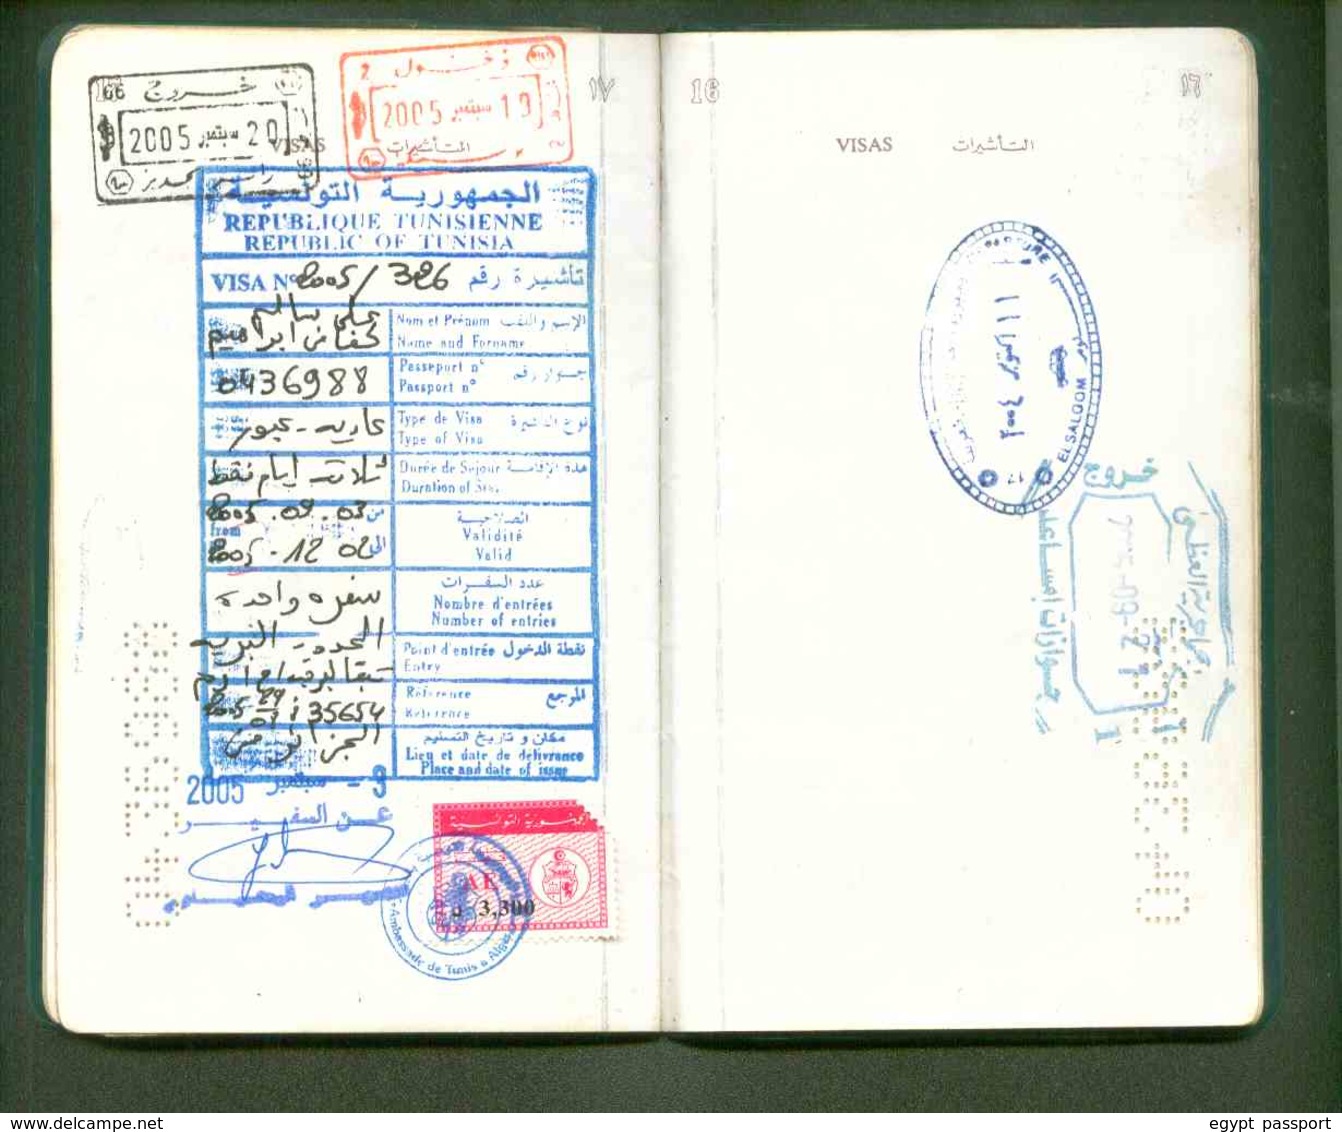 Egypt Passport Issue 2002 - Visa Saudi Arabia - Qatar - Algeria - Tunis - Condition as in scan